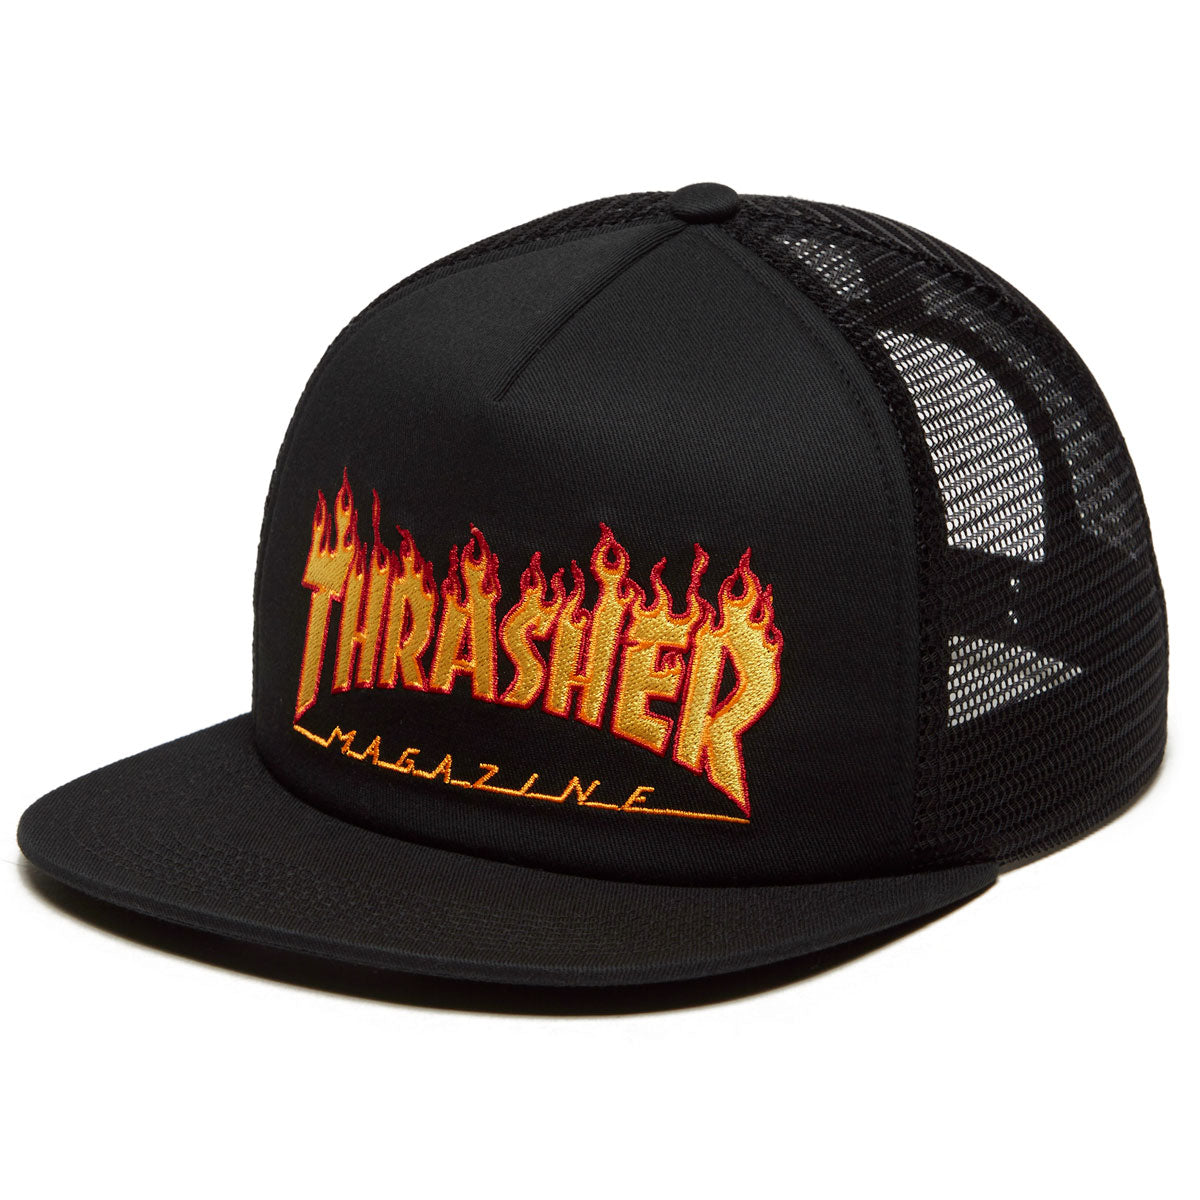 Thrasher Embroidered Flame Logo Hat - Black image 1